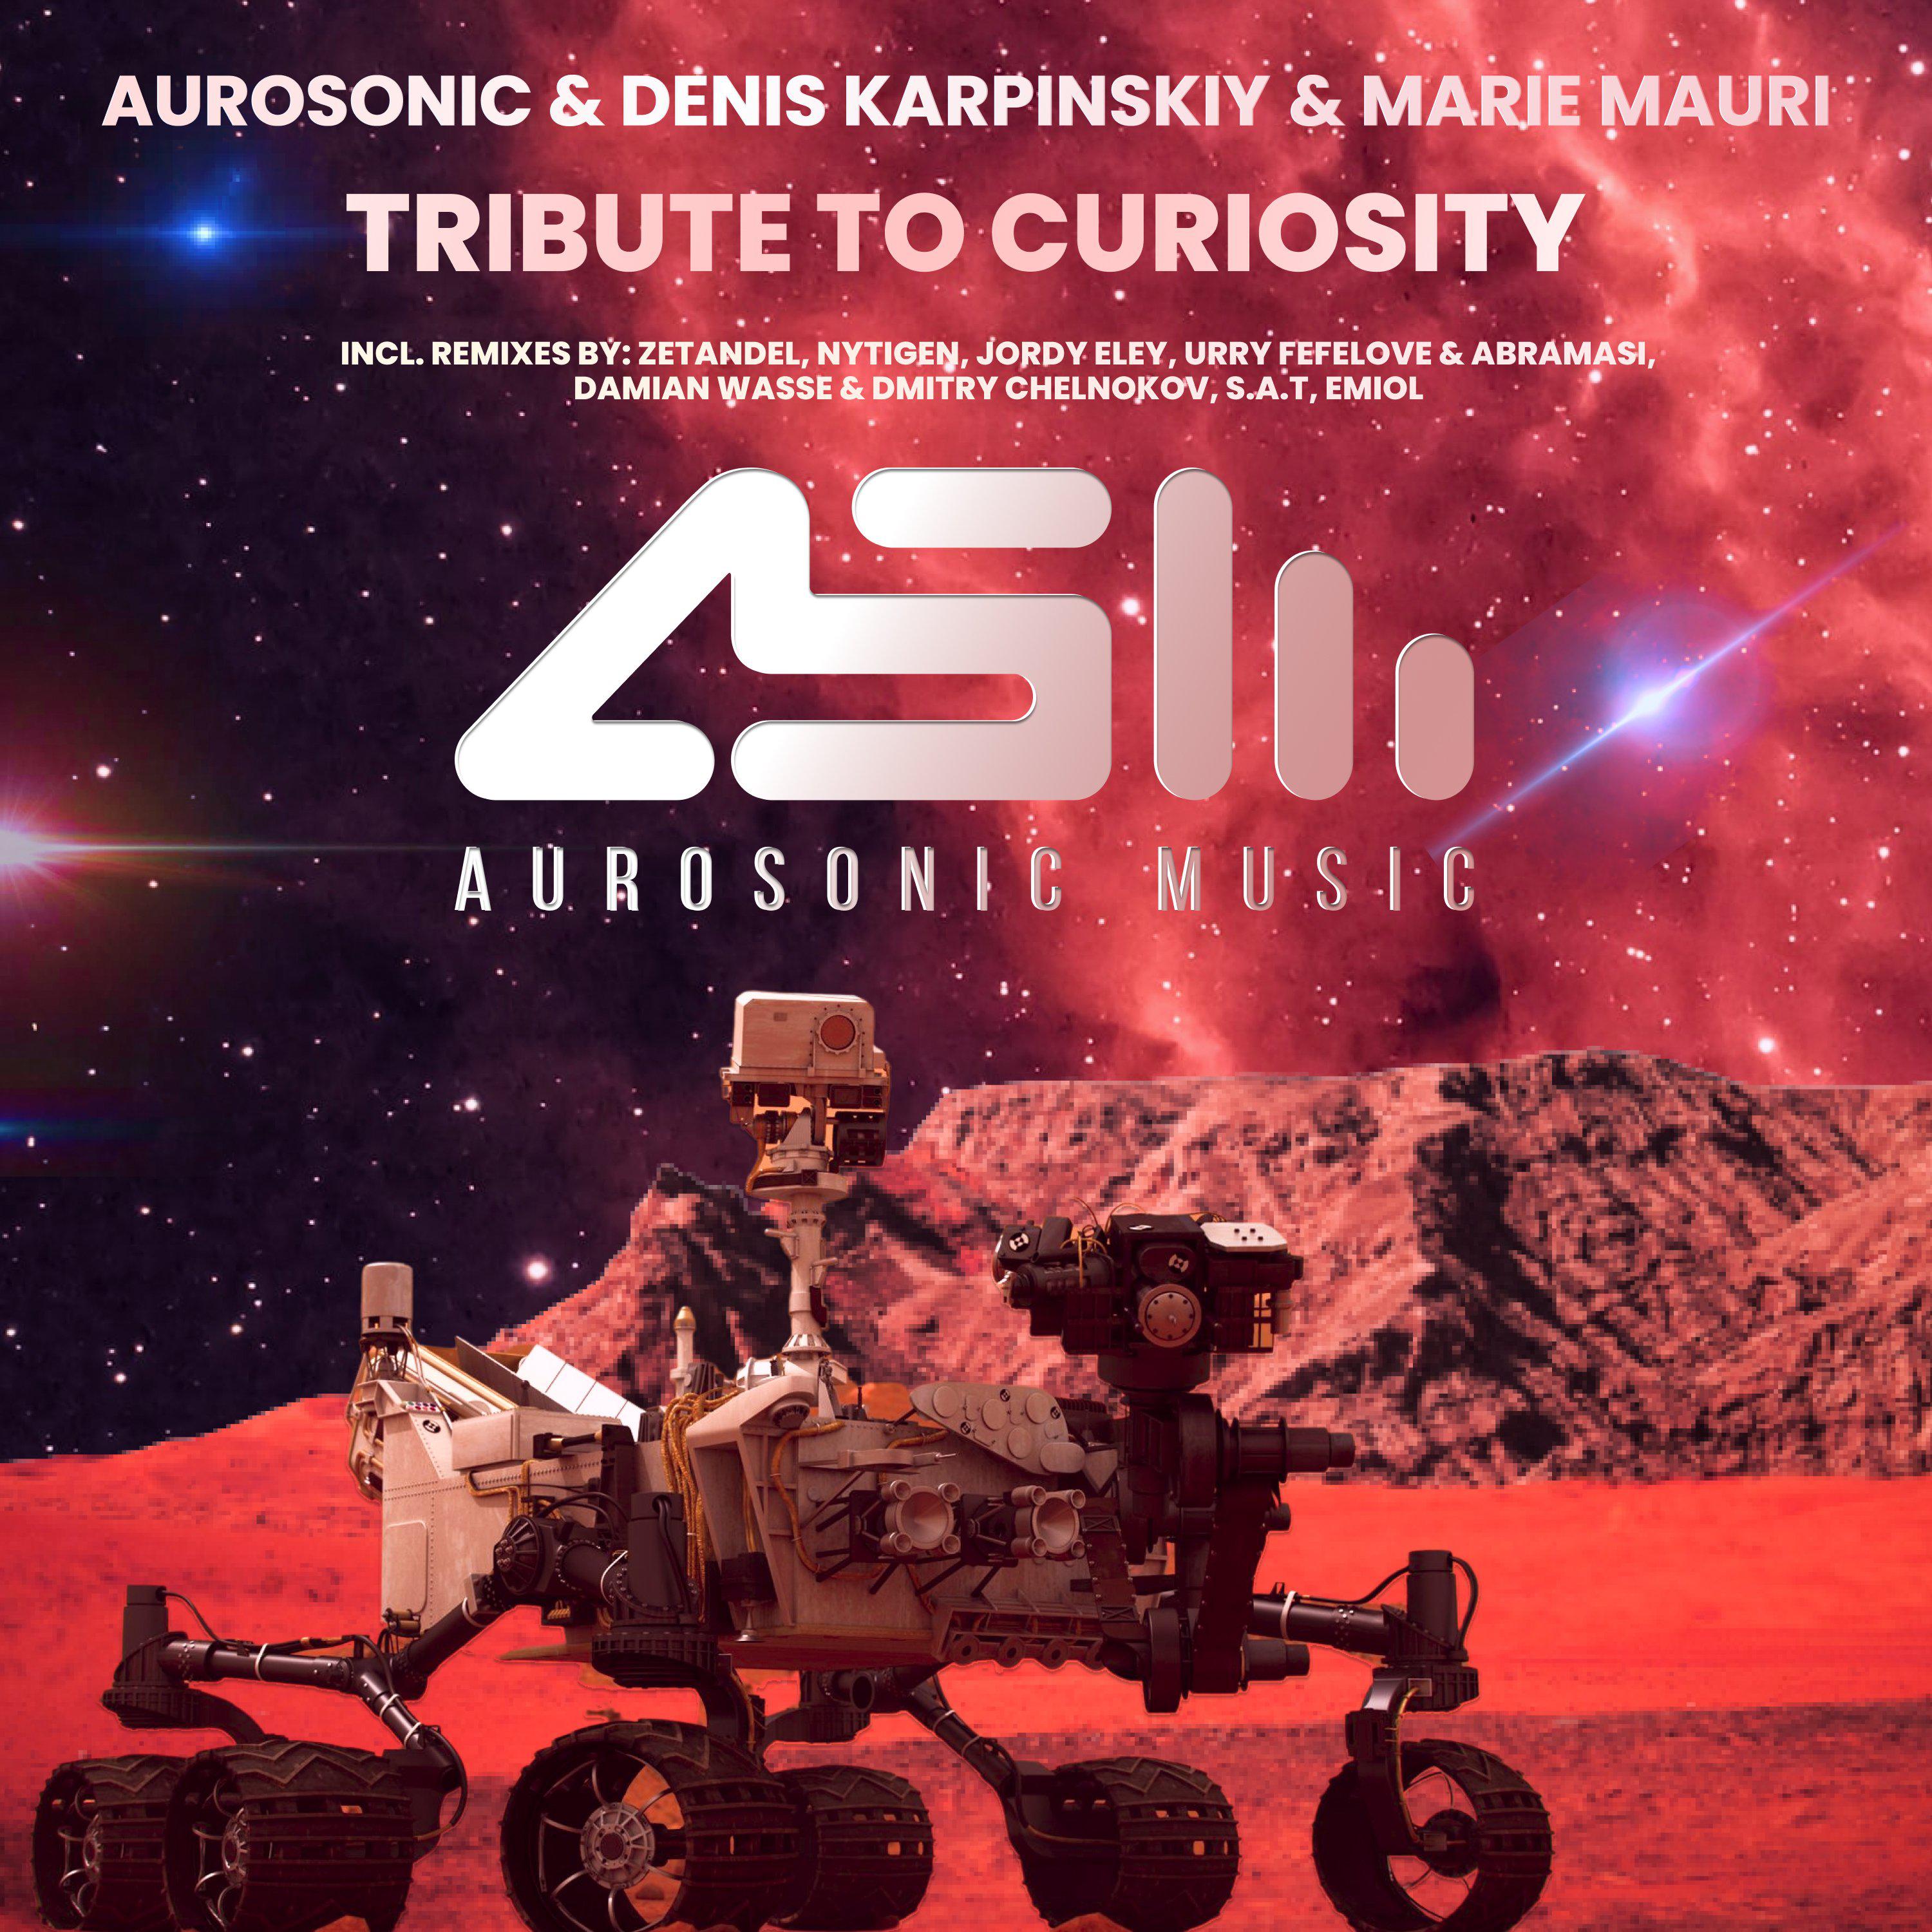 Aurosonic - Tribute To Curiosity (Urry Fefelove & Abramasi Remix)